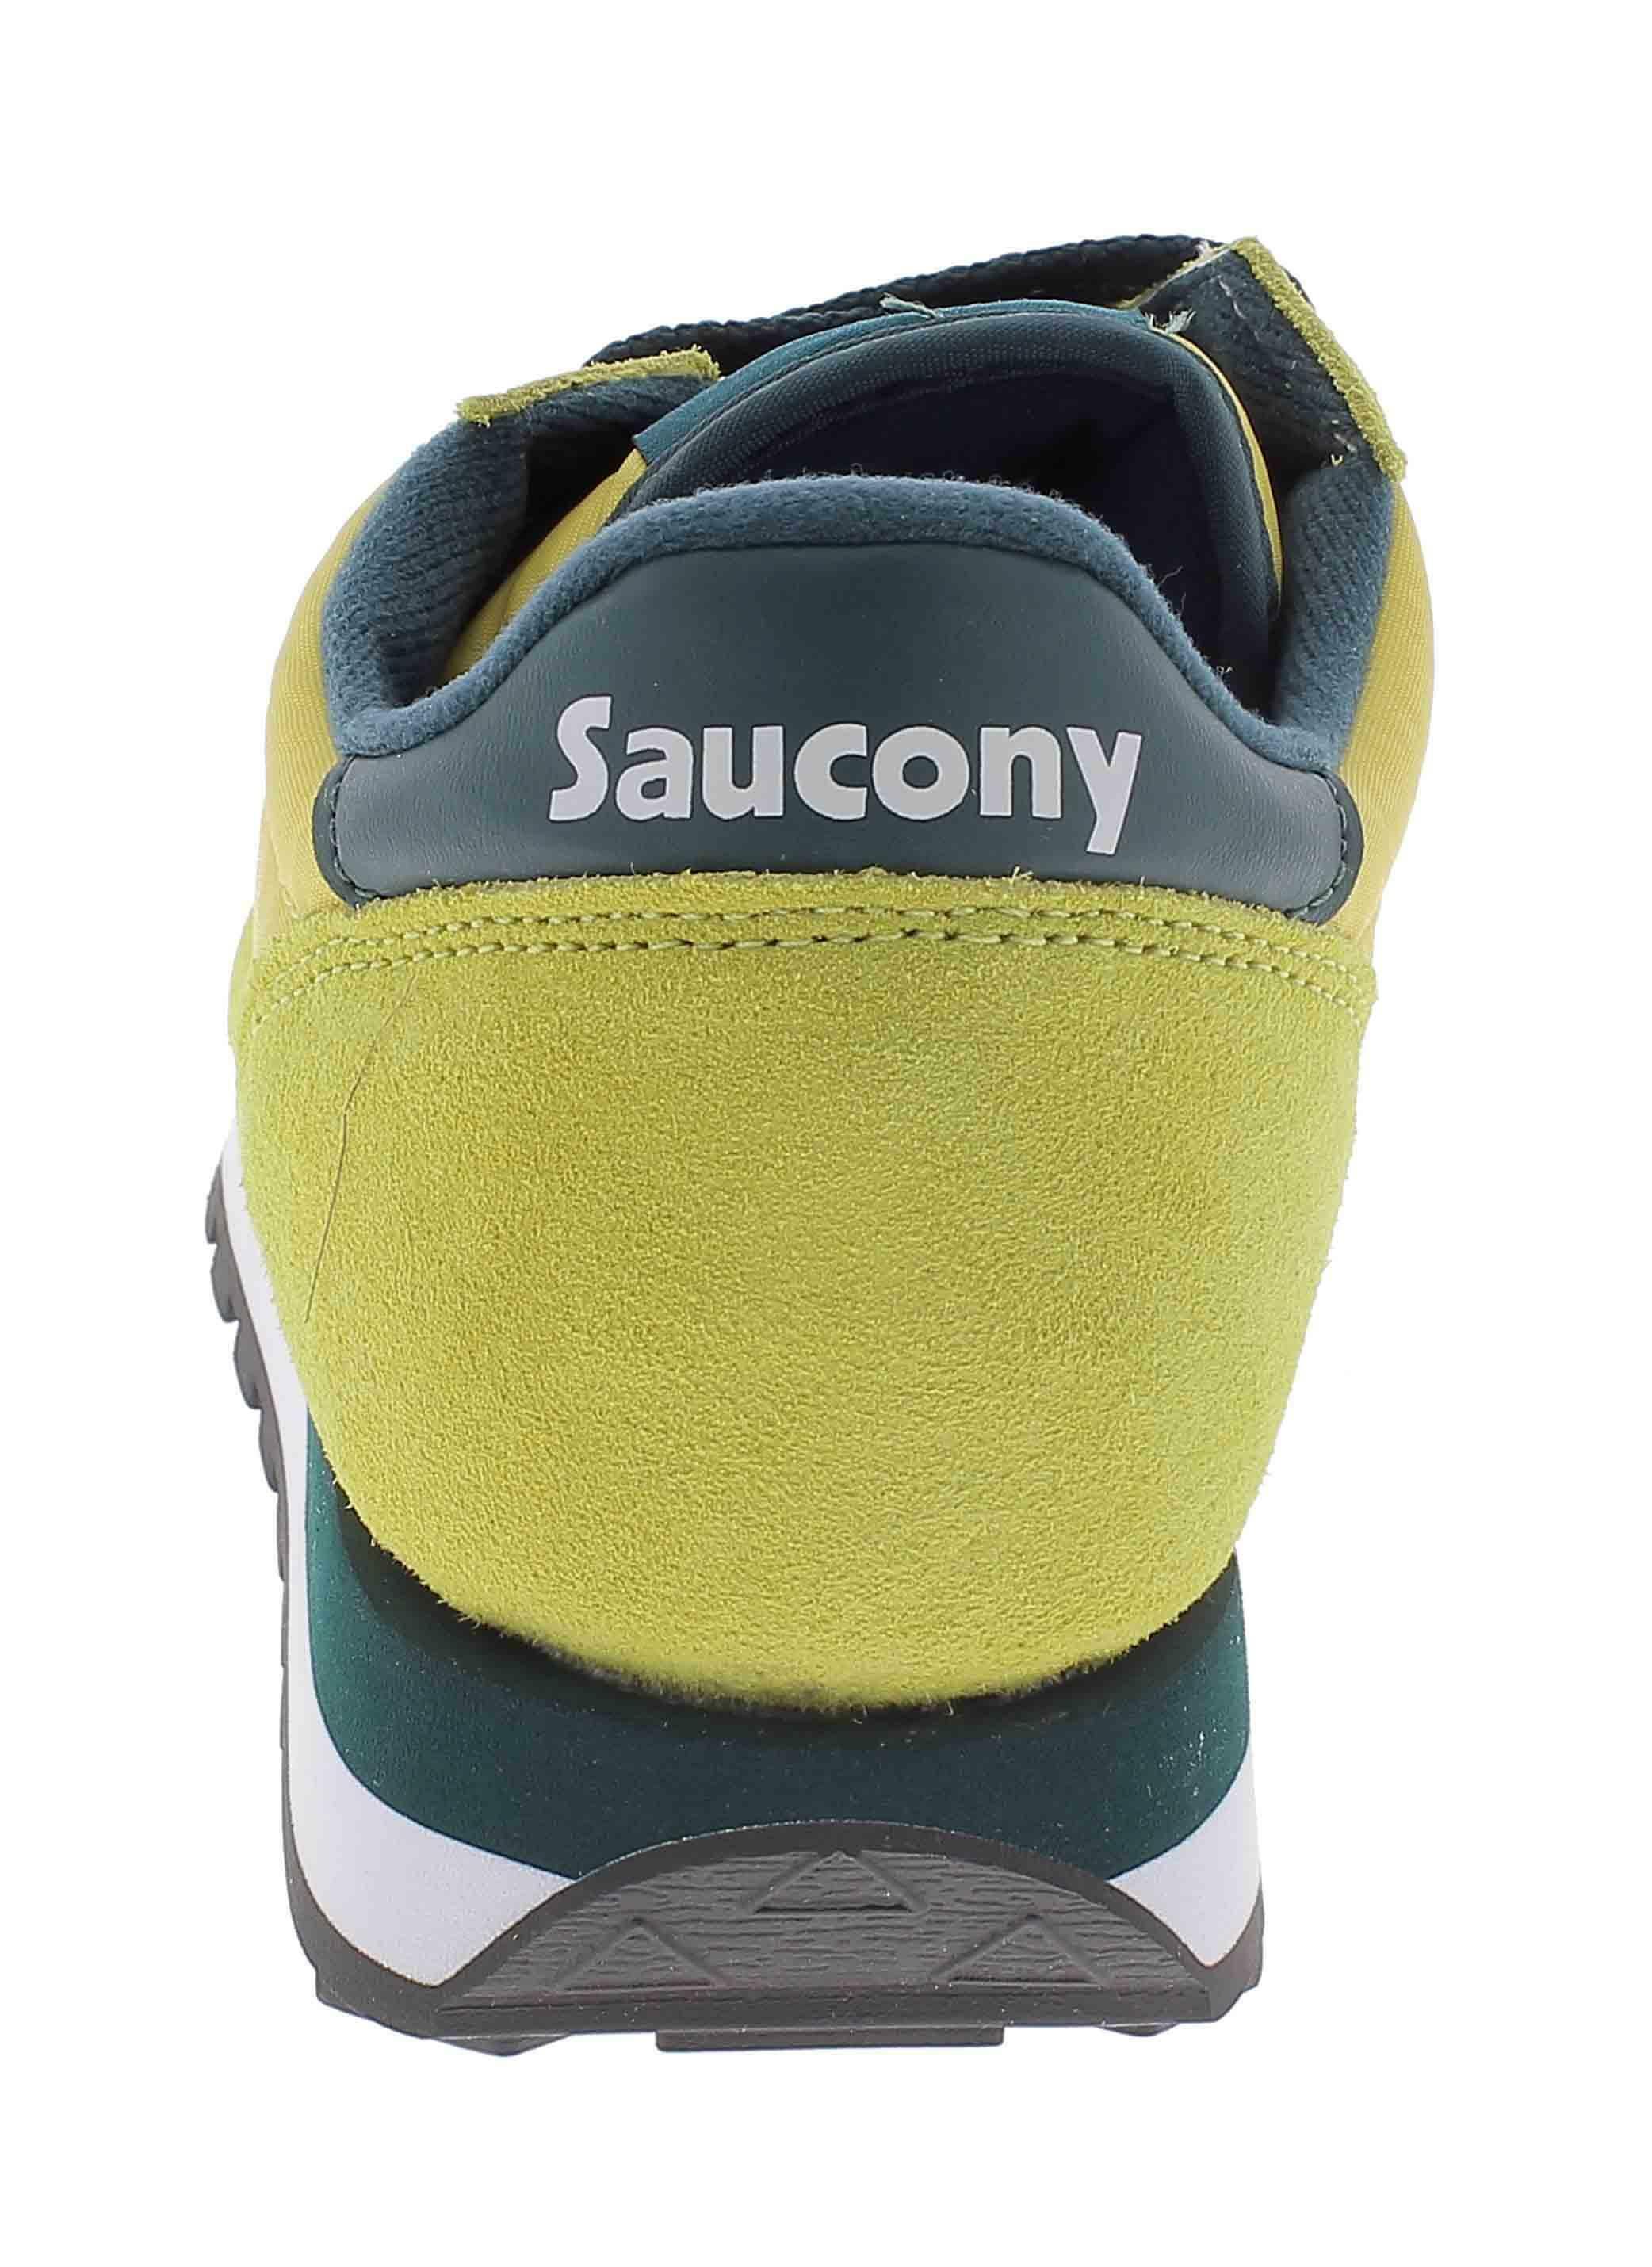 saucony saucony jazz original scarpe sportive uomo gialle 2044330